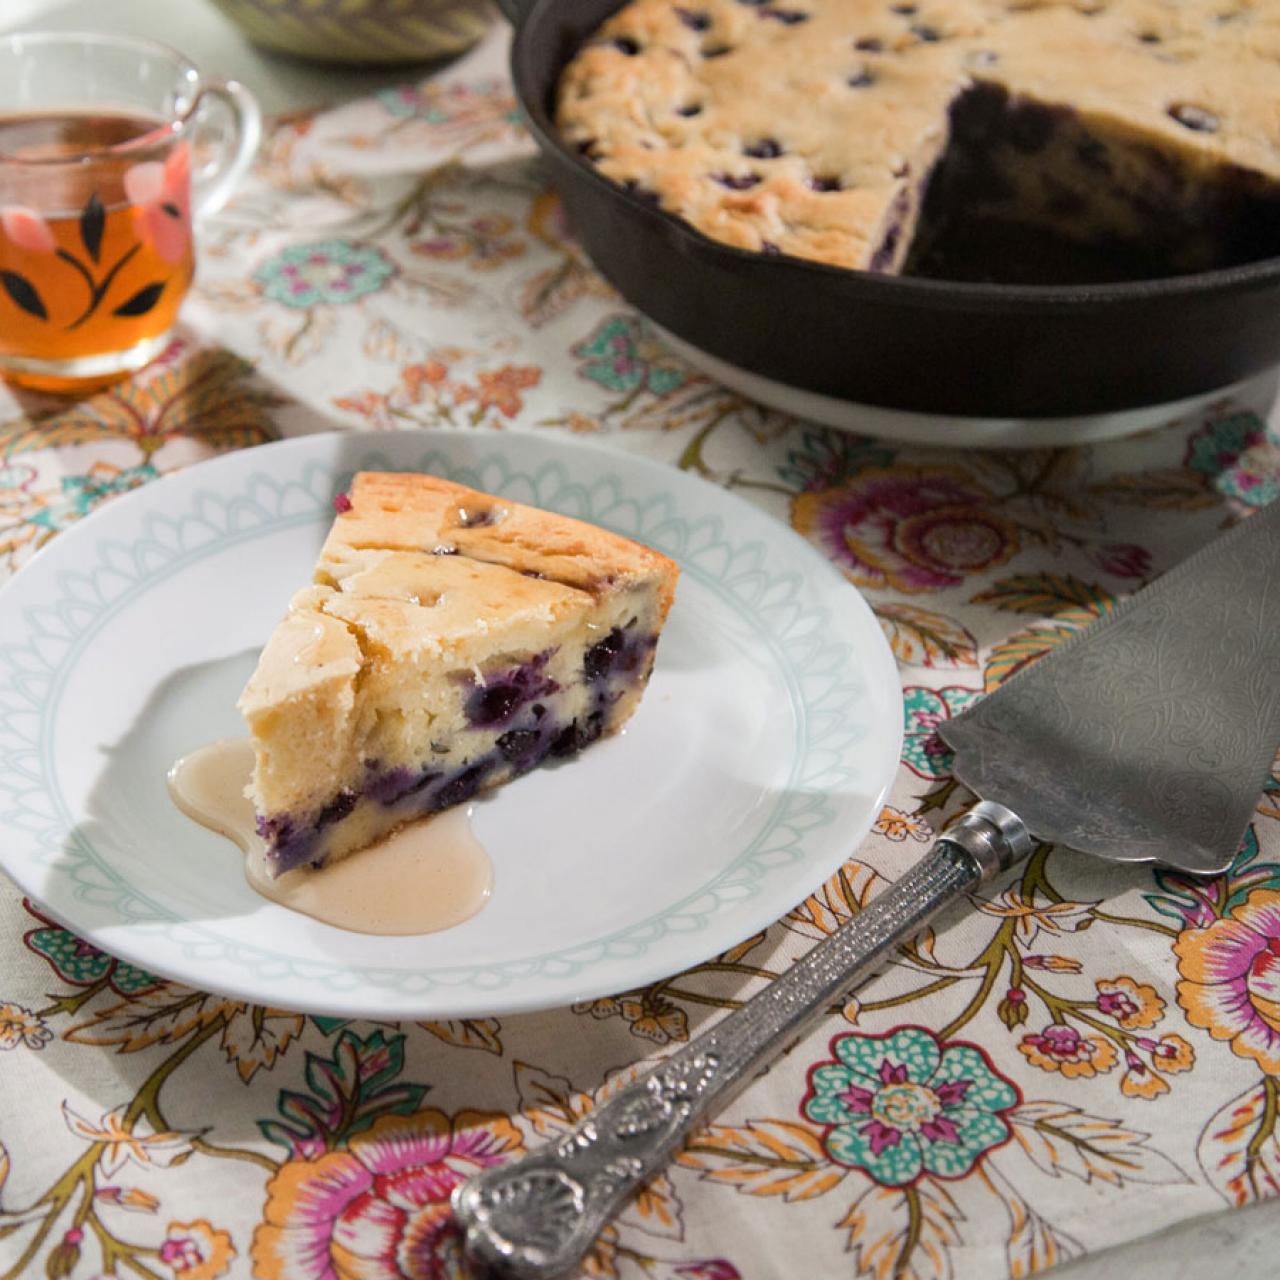 old-fashioned Sour Cream Lemon Blueberry Bundt Cake